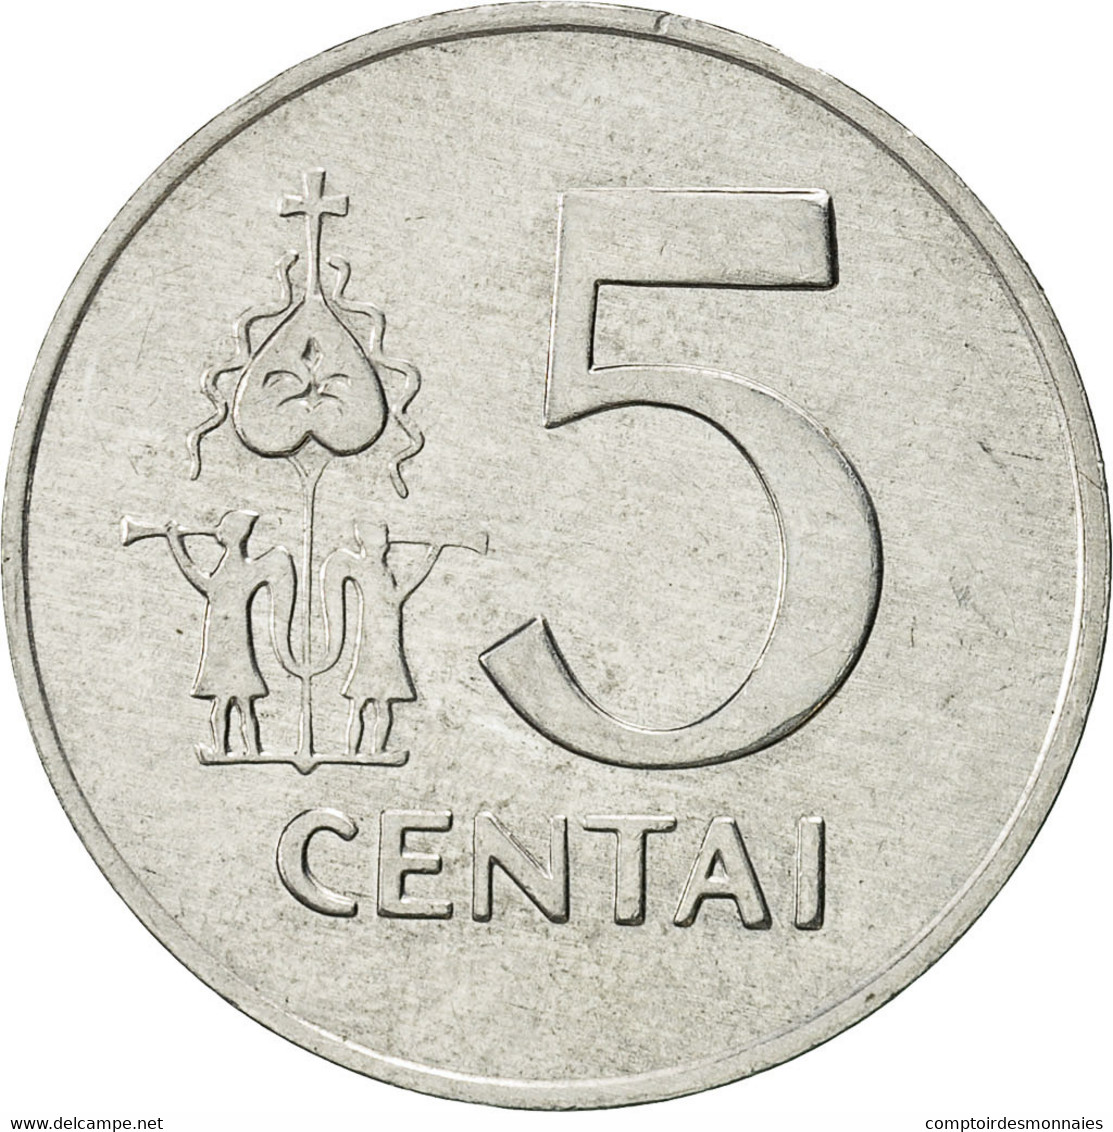 Monnaie, Lithuania, 5 Centai, 1991, TTB+, Aluminium, KM:87 - Litouwen